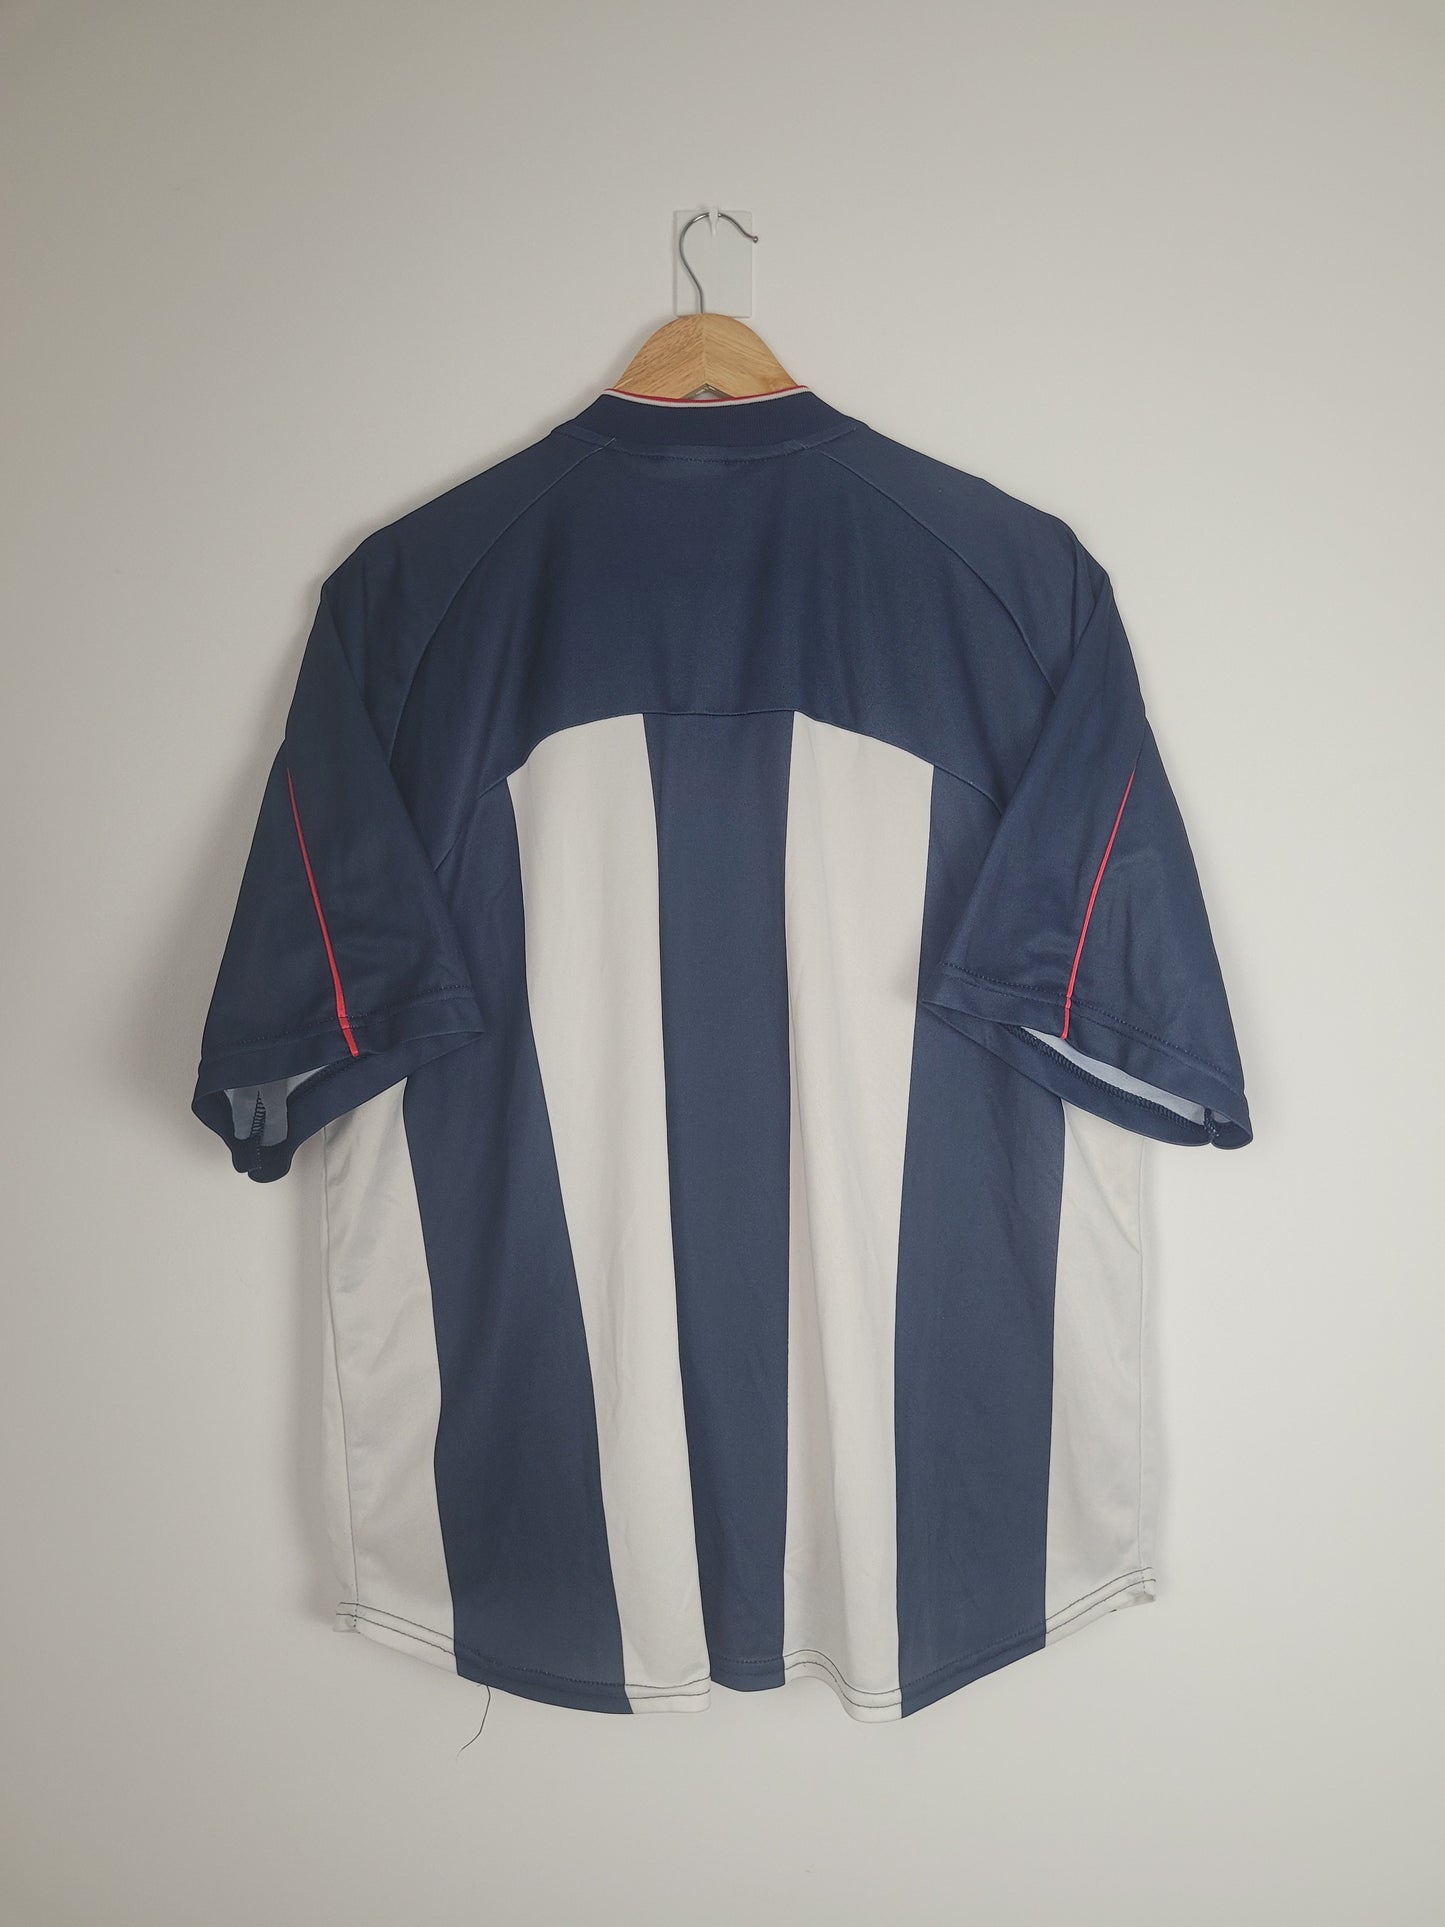 
                  
                    Original West Bromwich Albion Home Jersey 2000-2002 - XL
                  
                